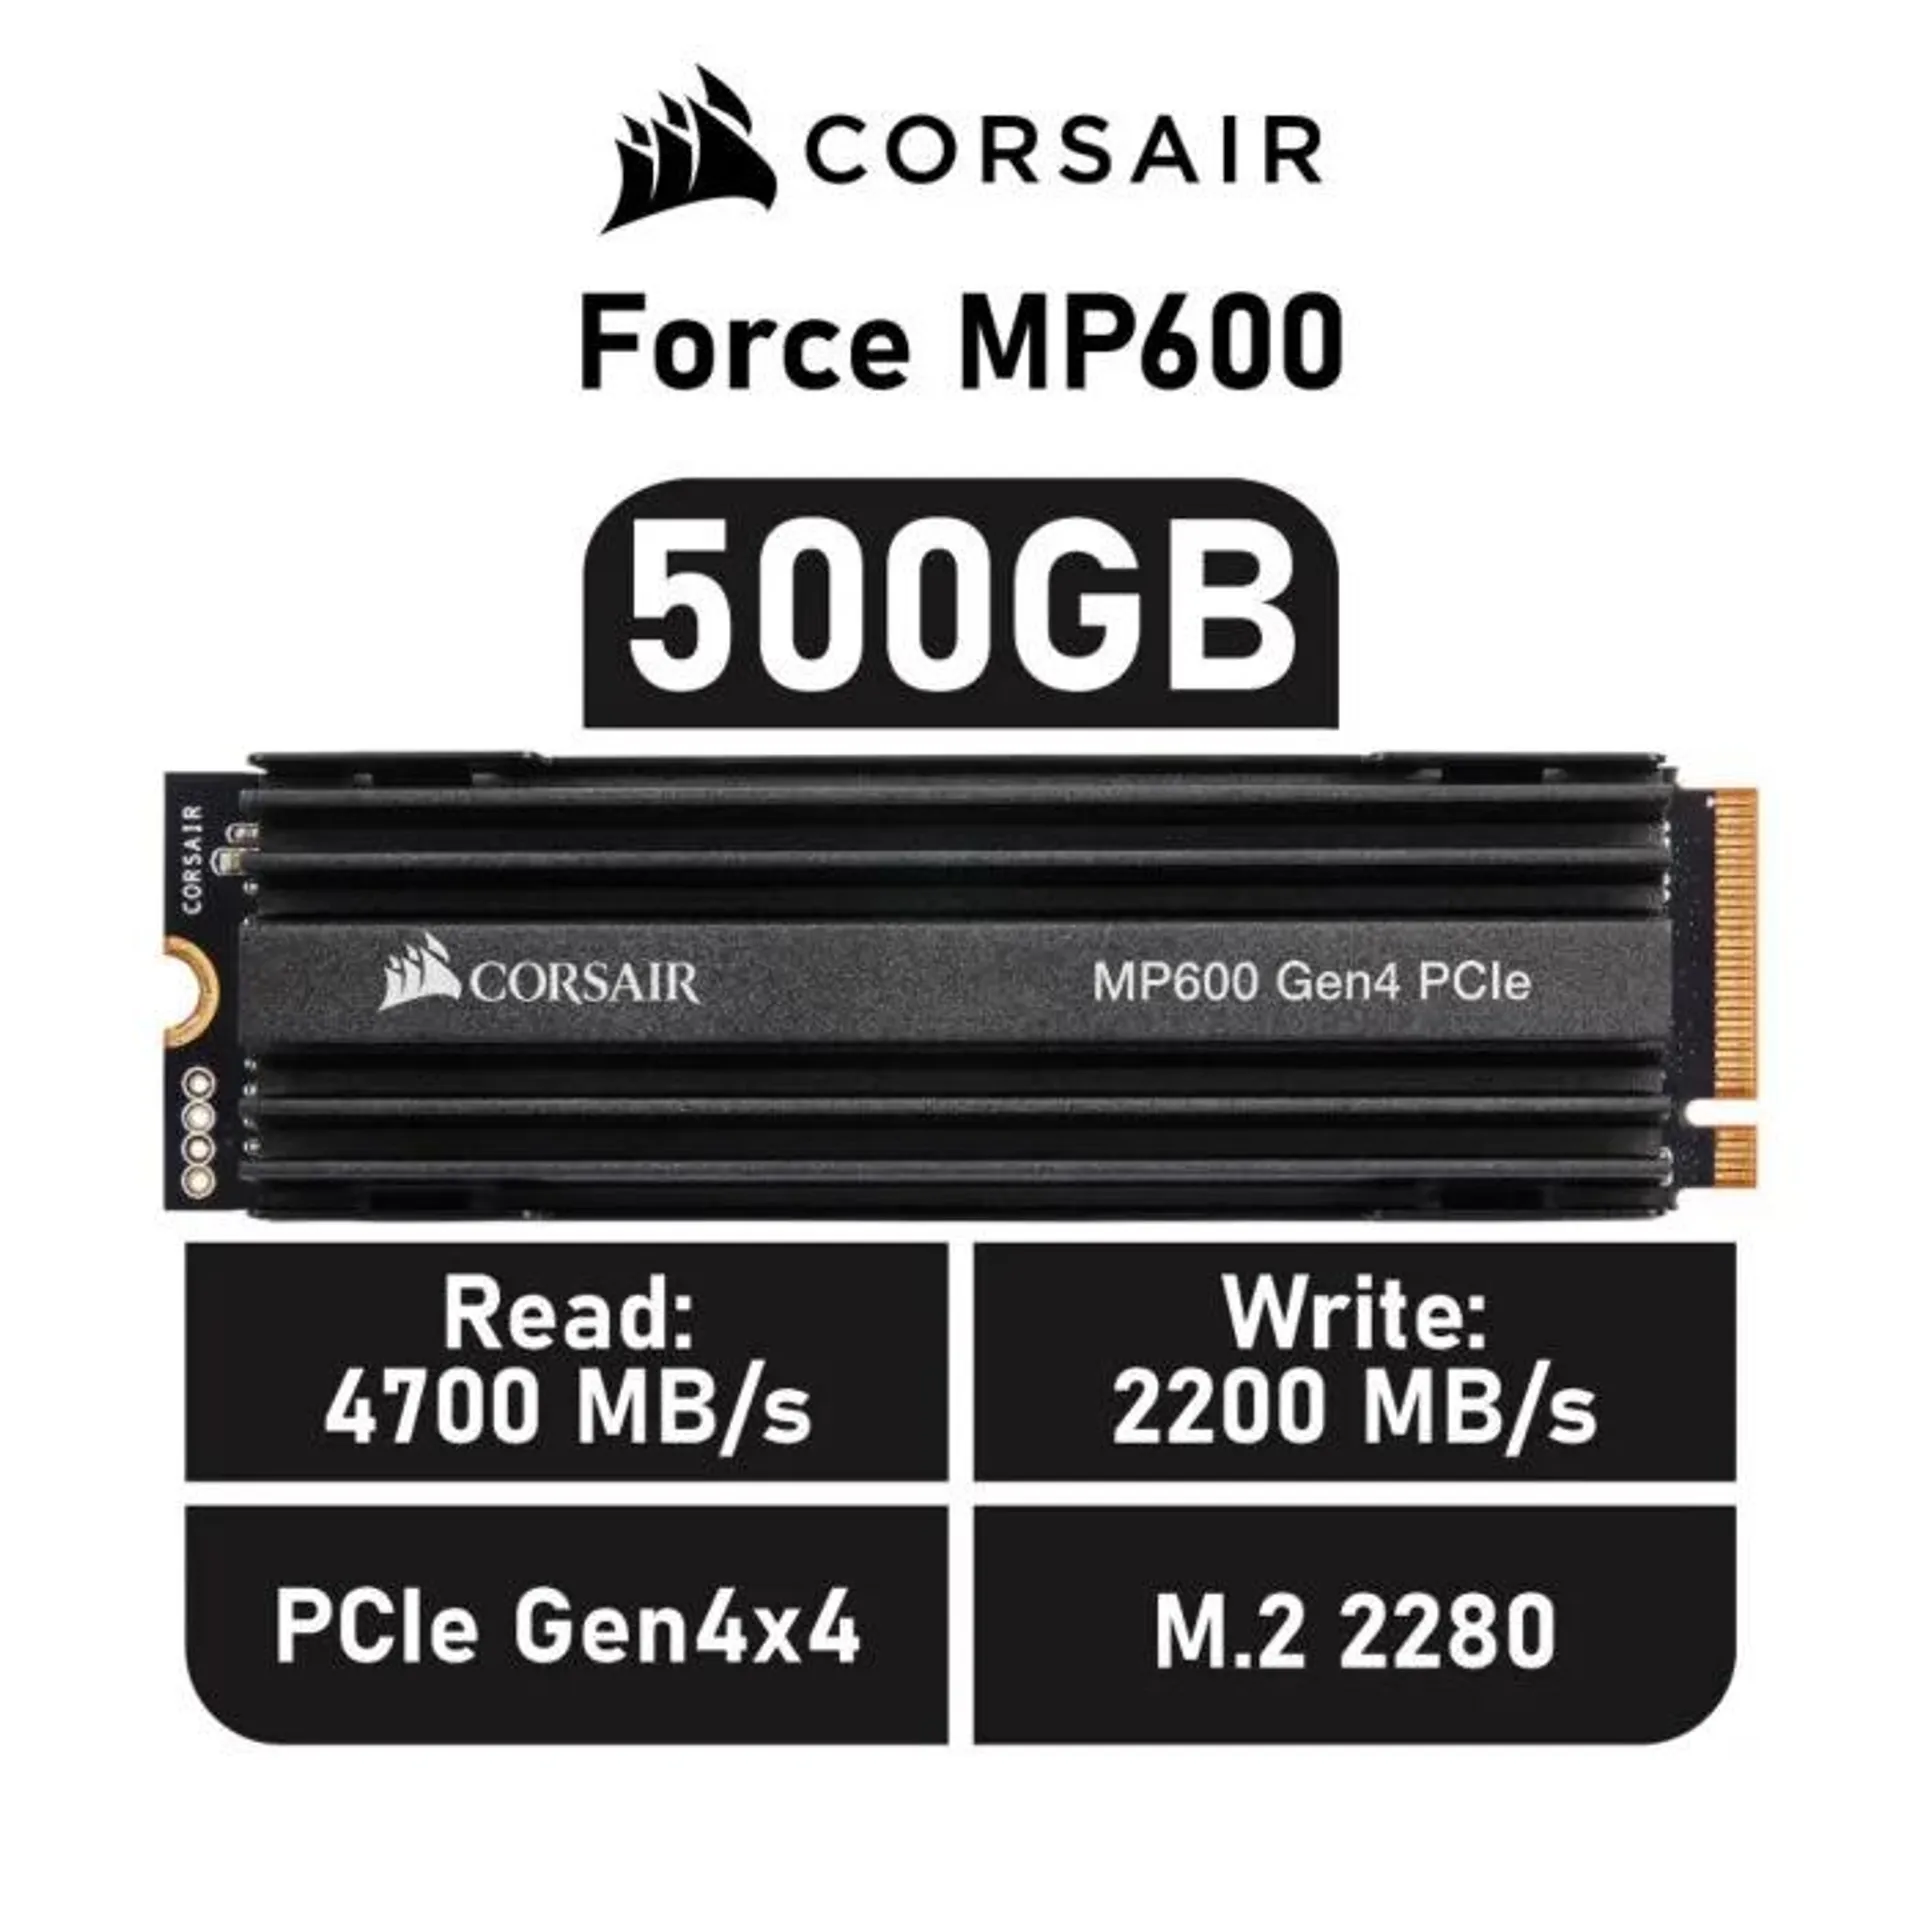 CORSAIR Force MP600 500GB PCIe Gen4x4 CSSD-F500GBMP600R2 M.2 2280 Solid State Drive